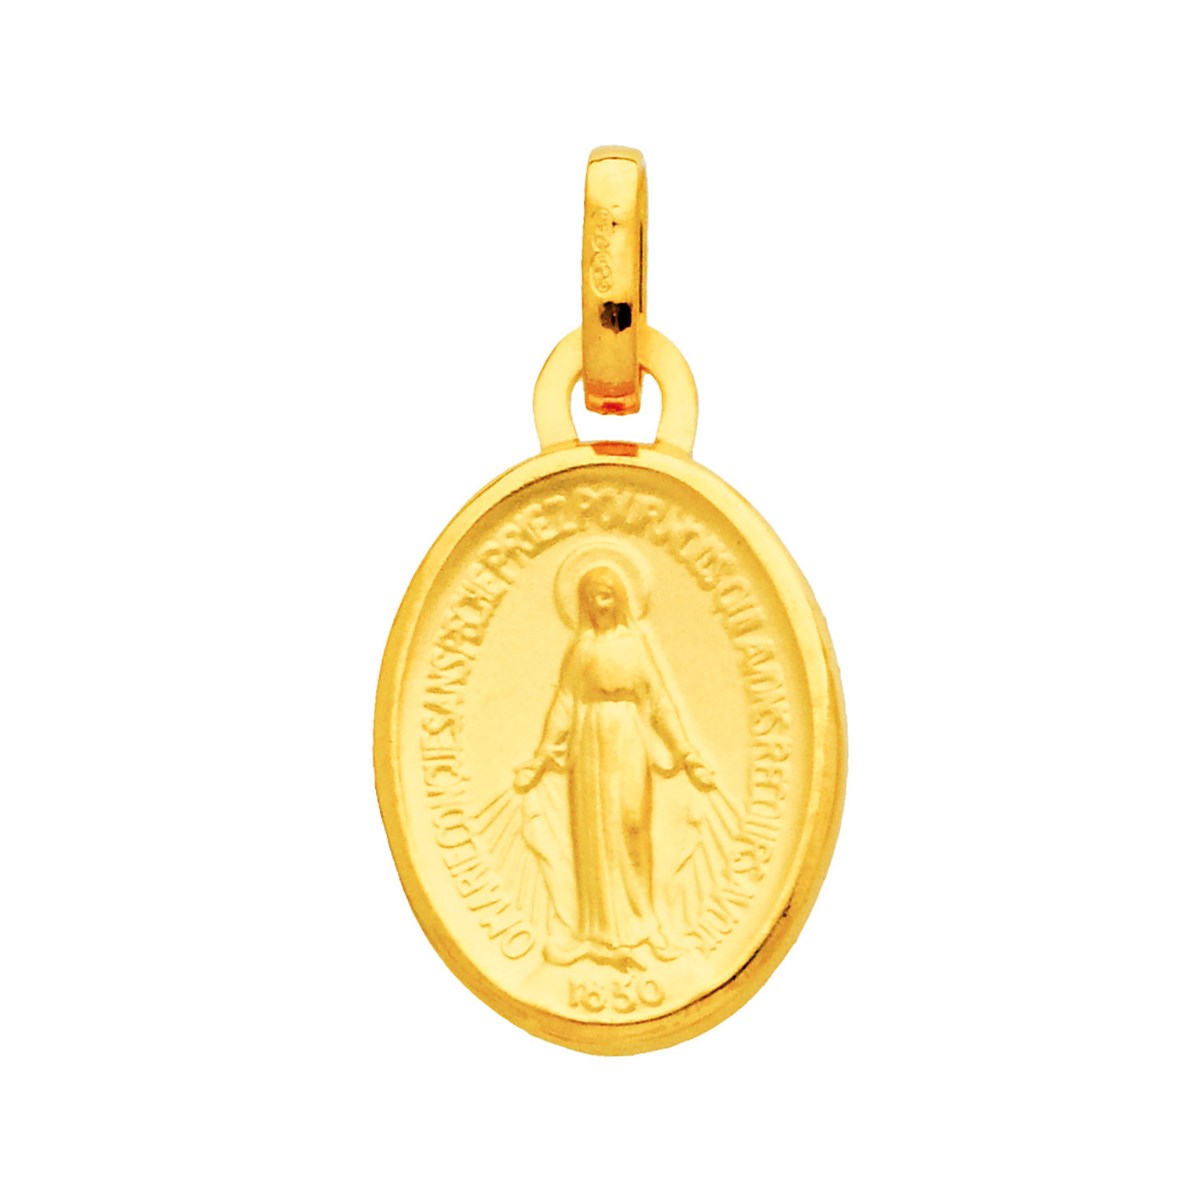 Médaille Brillaxis vierge miraculeuse 10 x13mm
Or jaune 18 carats